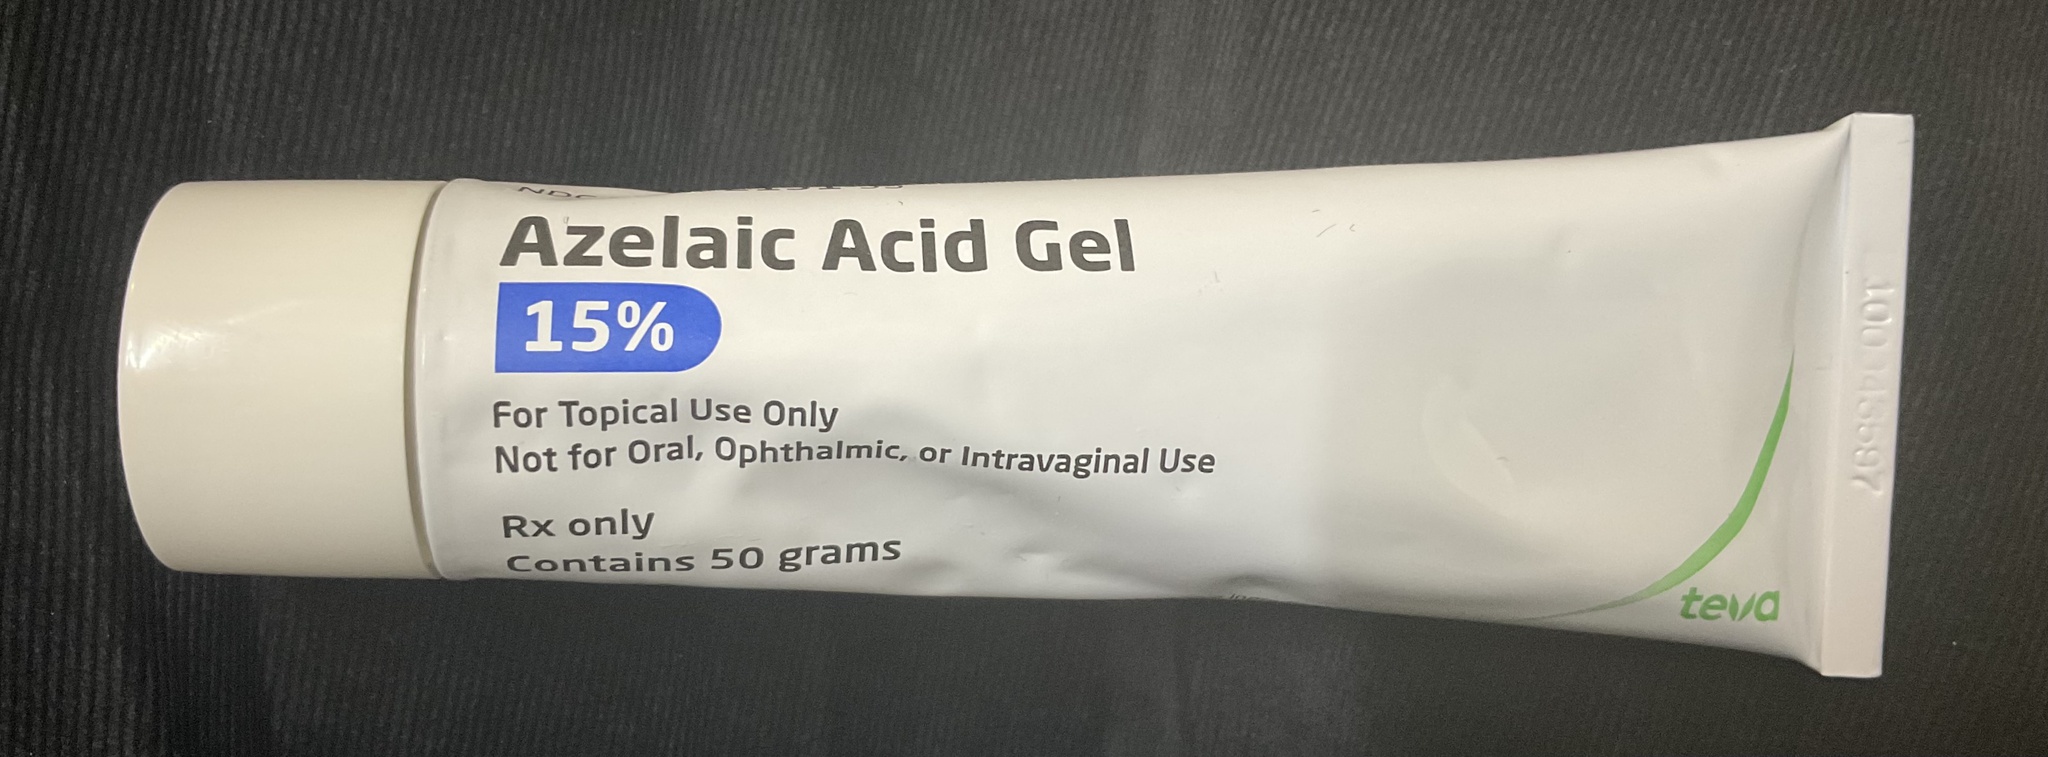 TEVA Azelaic Acid Gel